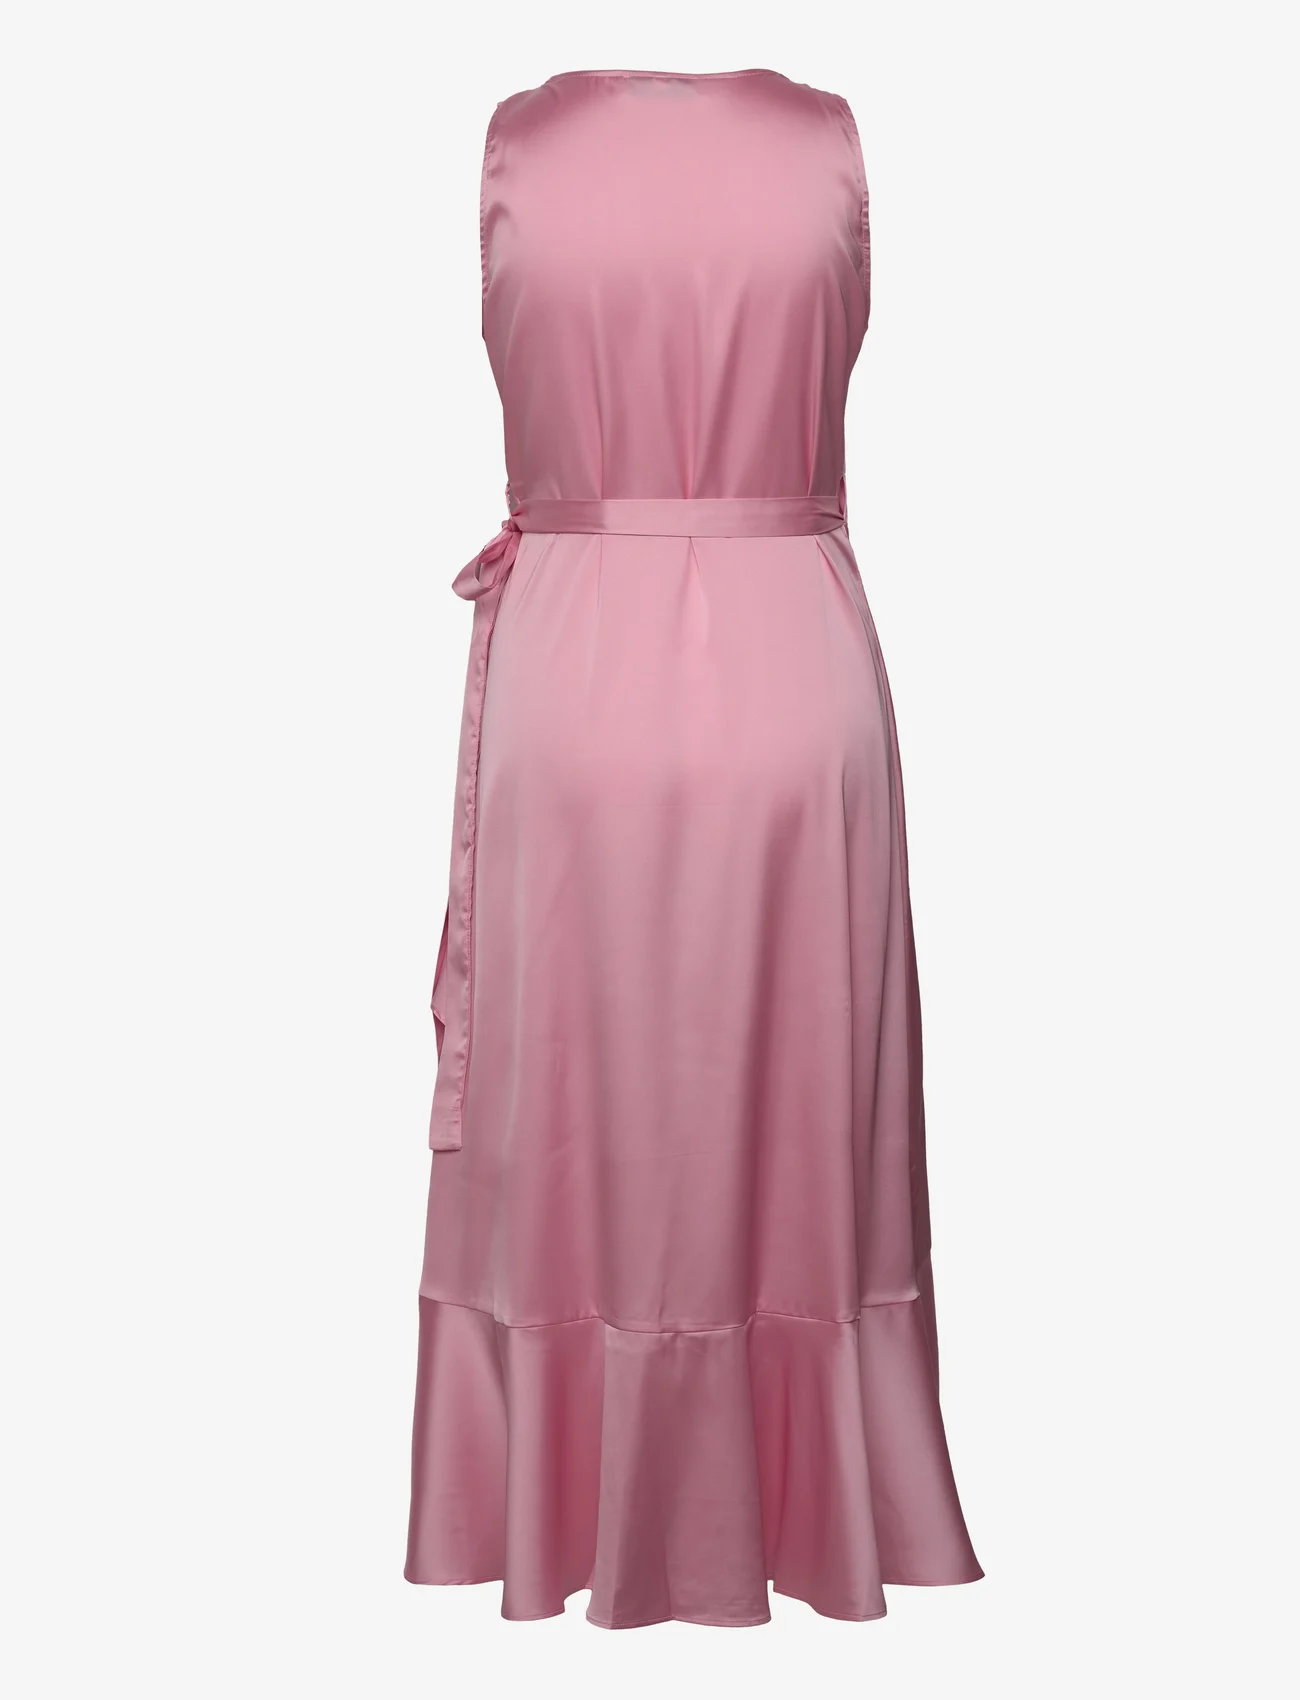 A-View - Camilji sleeveless dress - wickelkleider - rose - 1